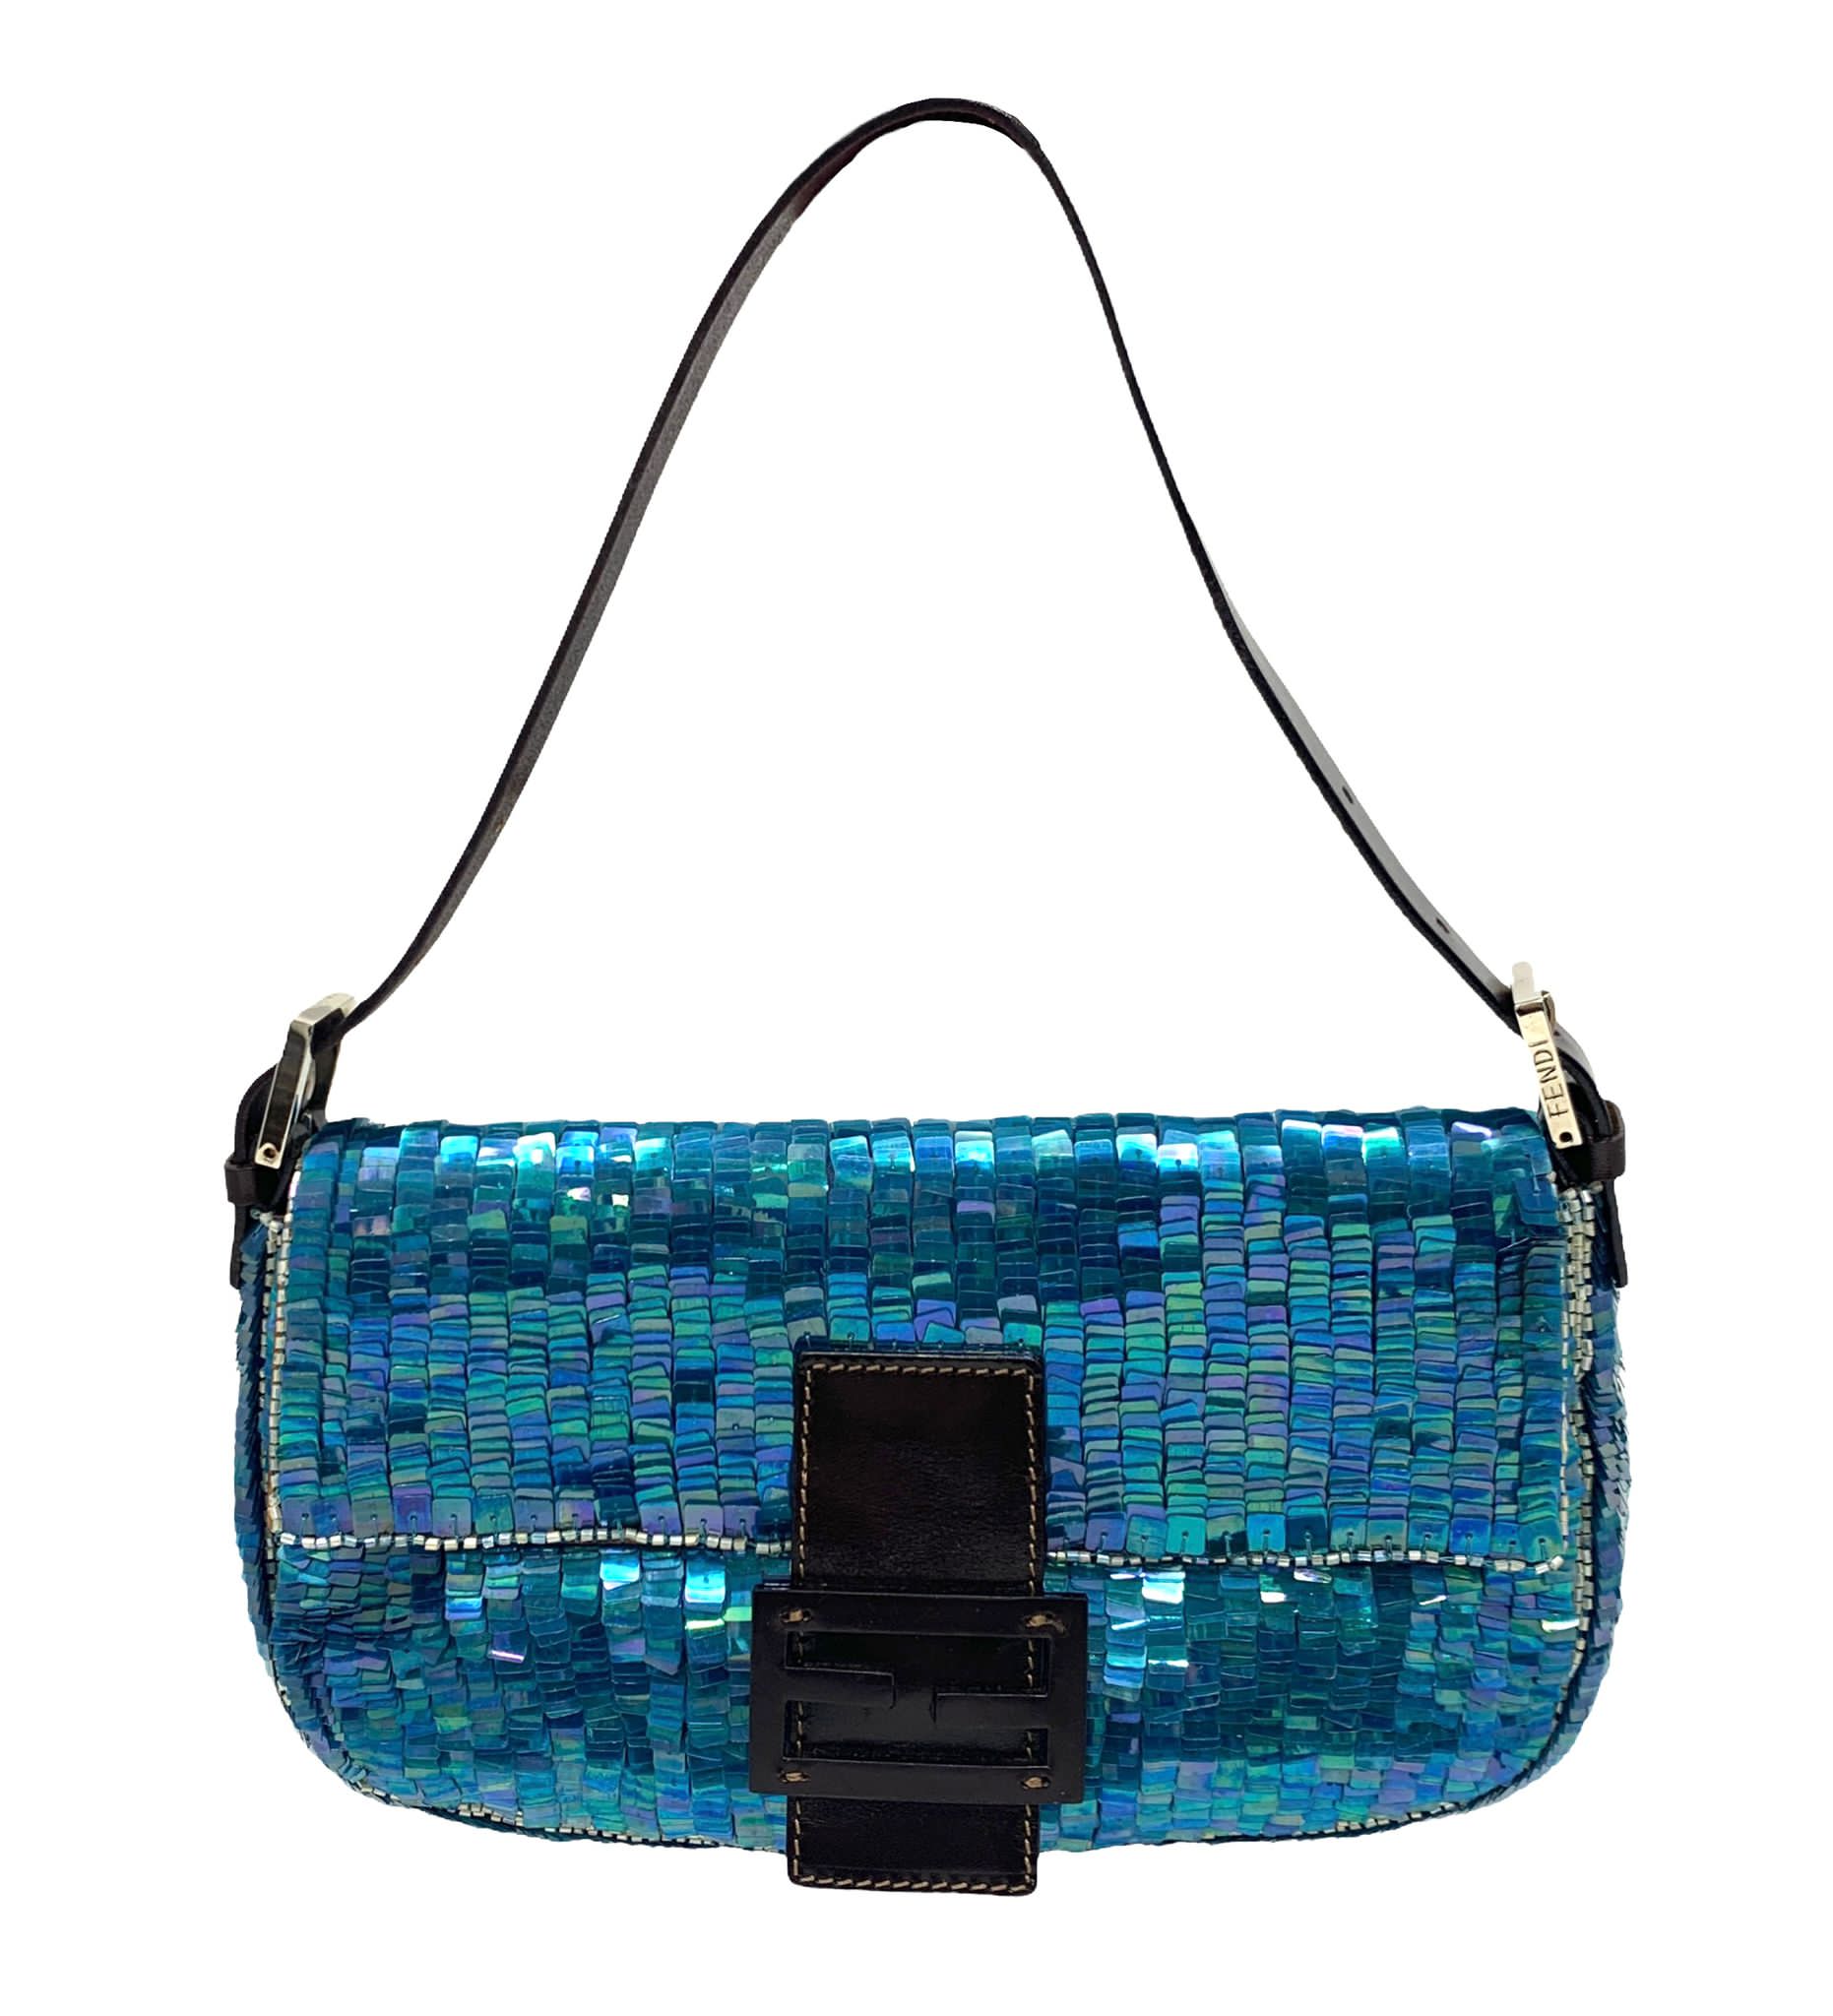 Fendi Baguette Sequins Crystal Bag for Sale in Yorba Linda, CA